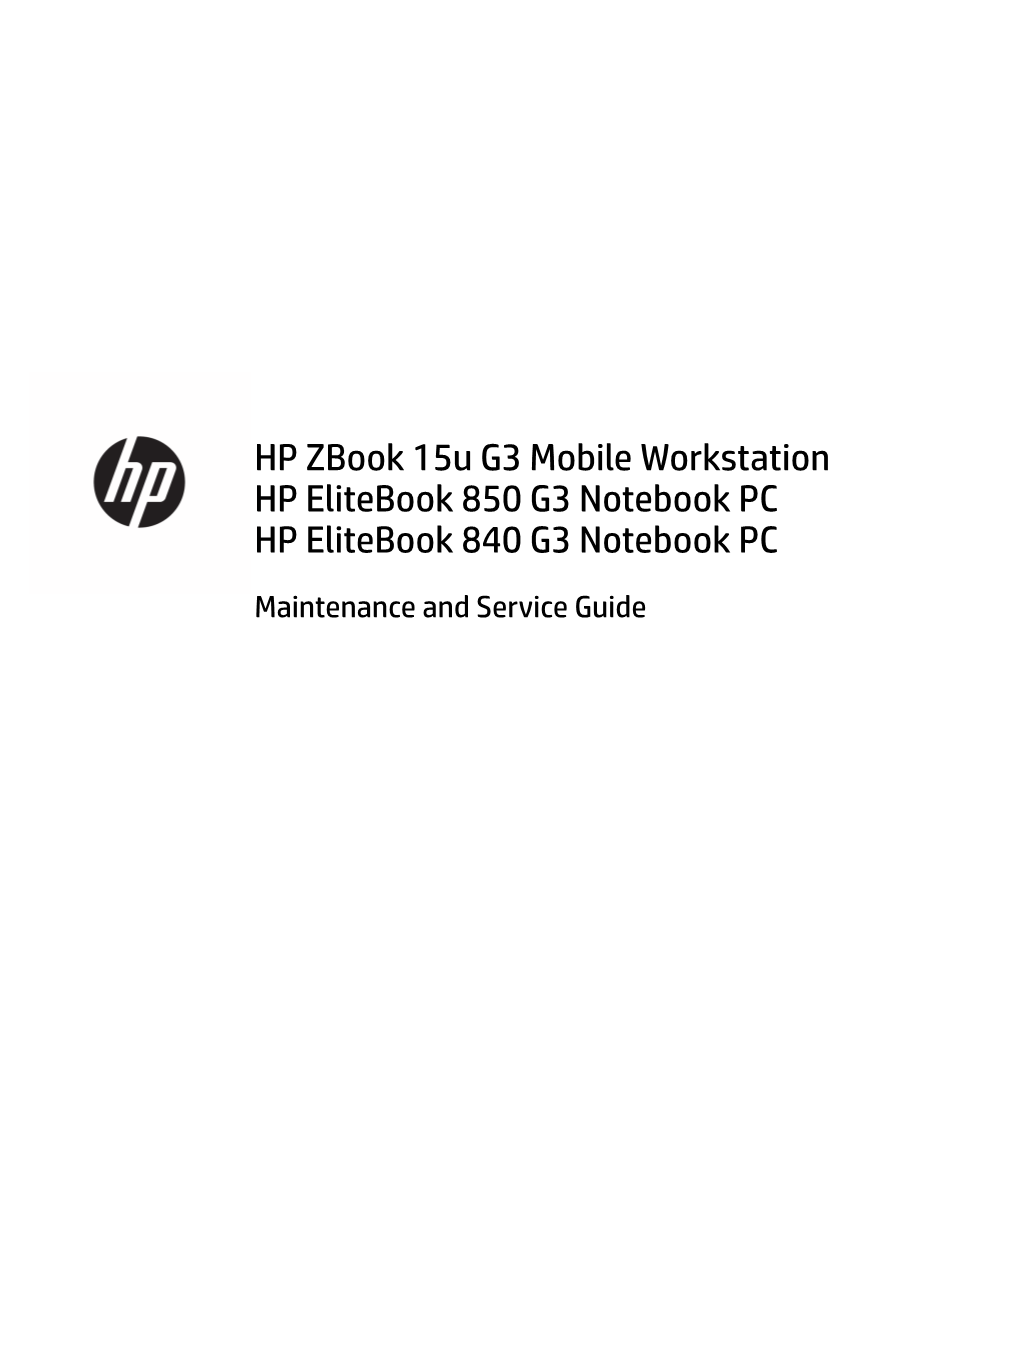 HP Zbook 15U G3 Mobile Workstationhp Elitebook 850 G3